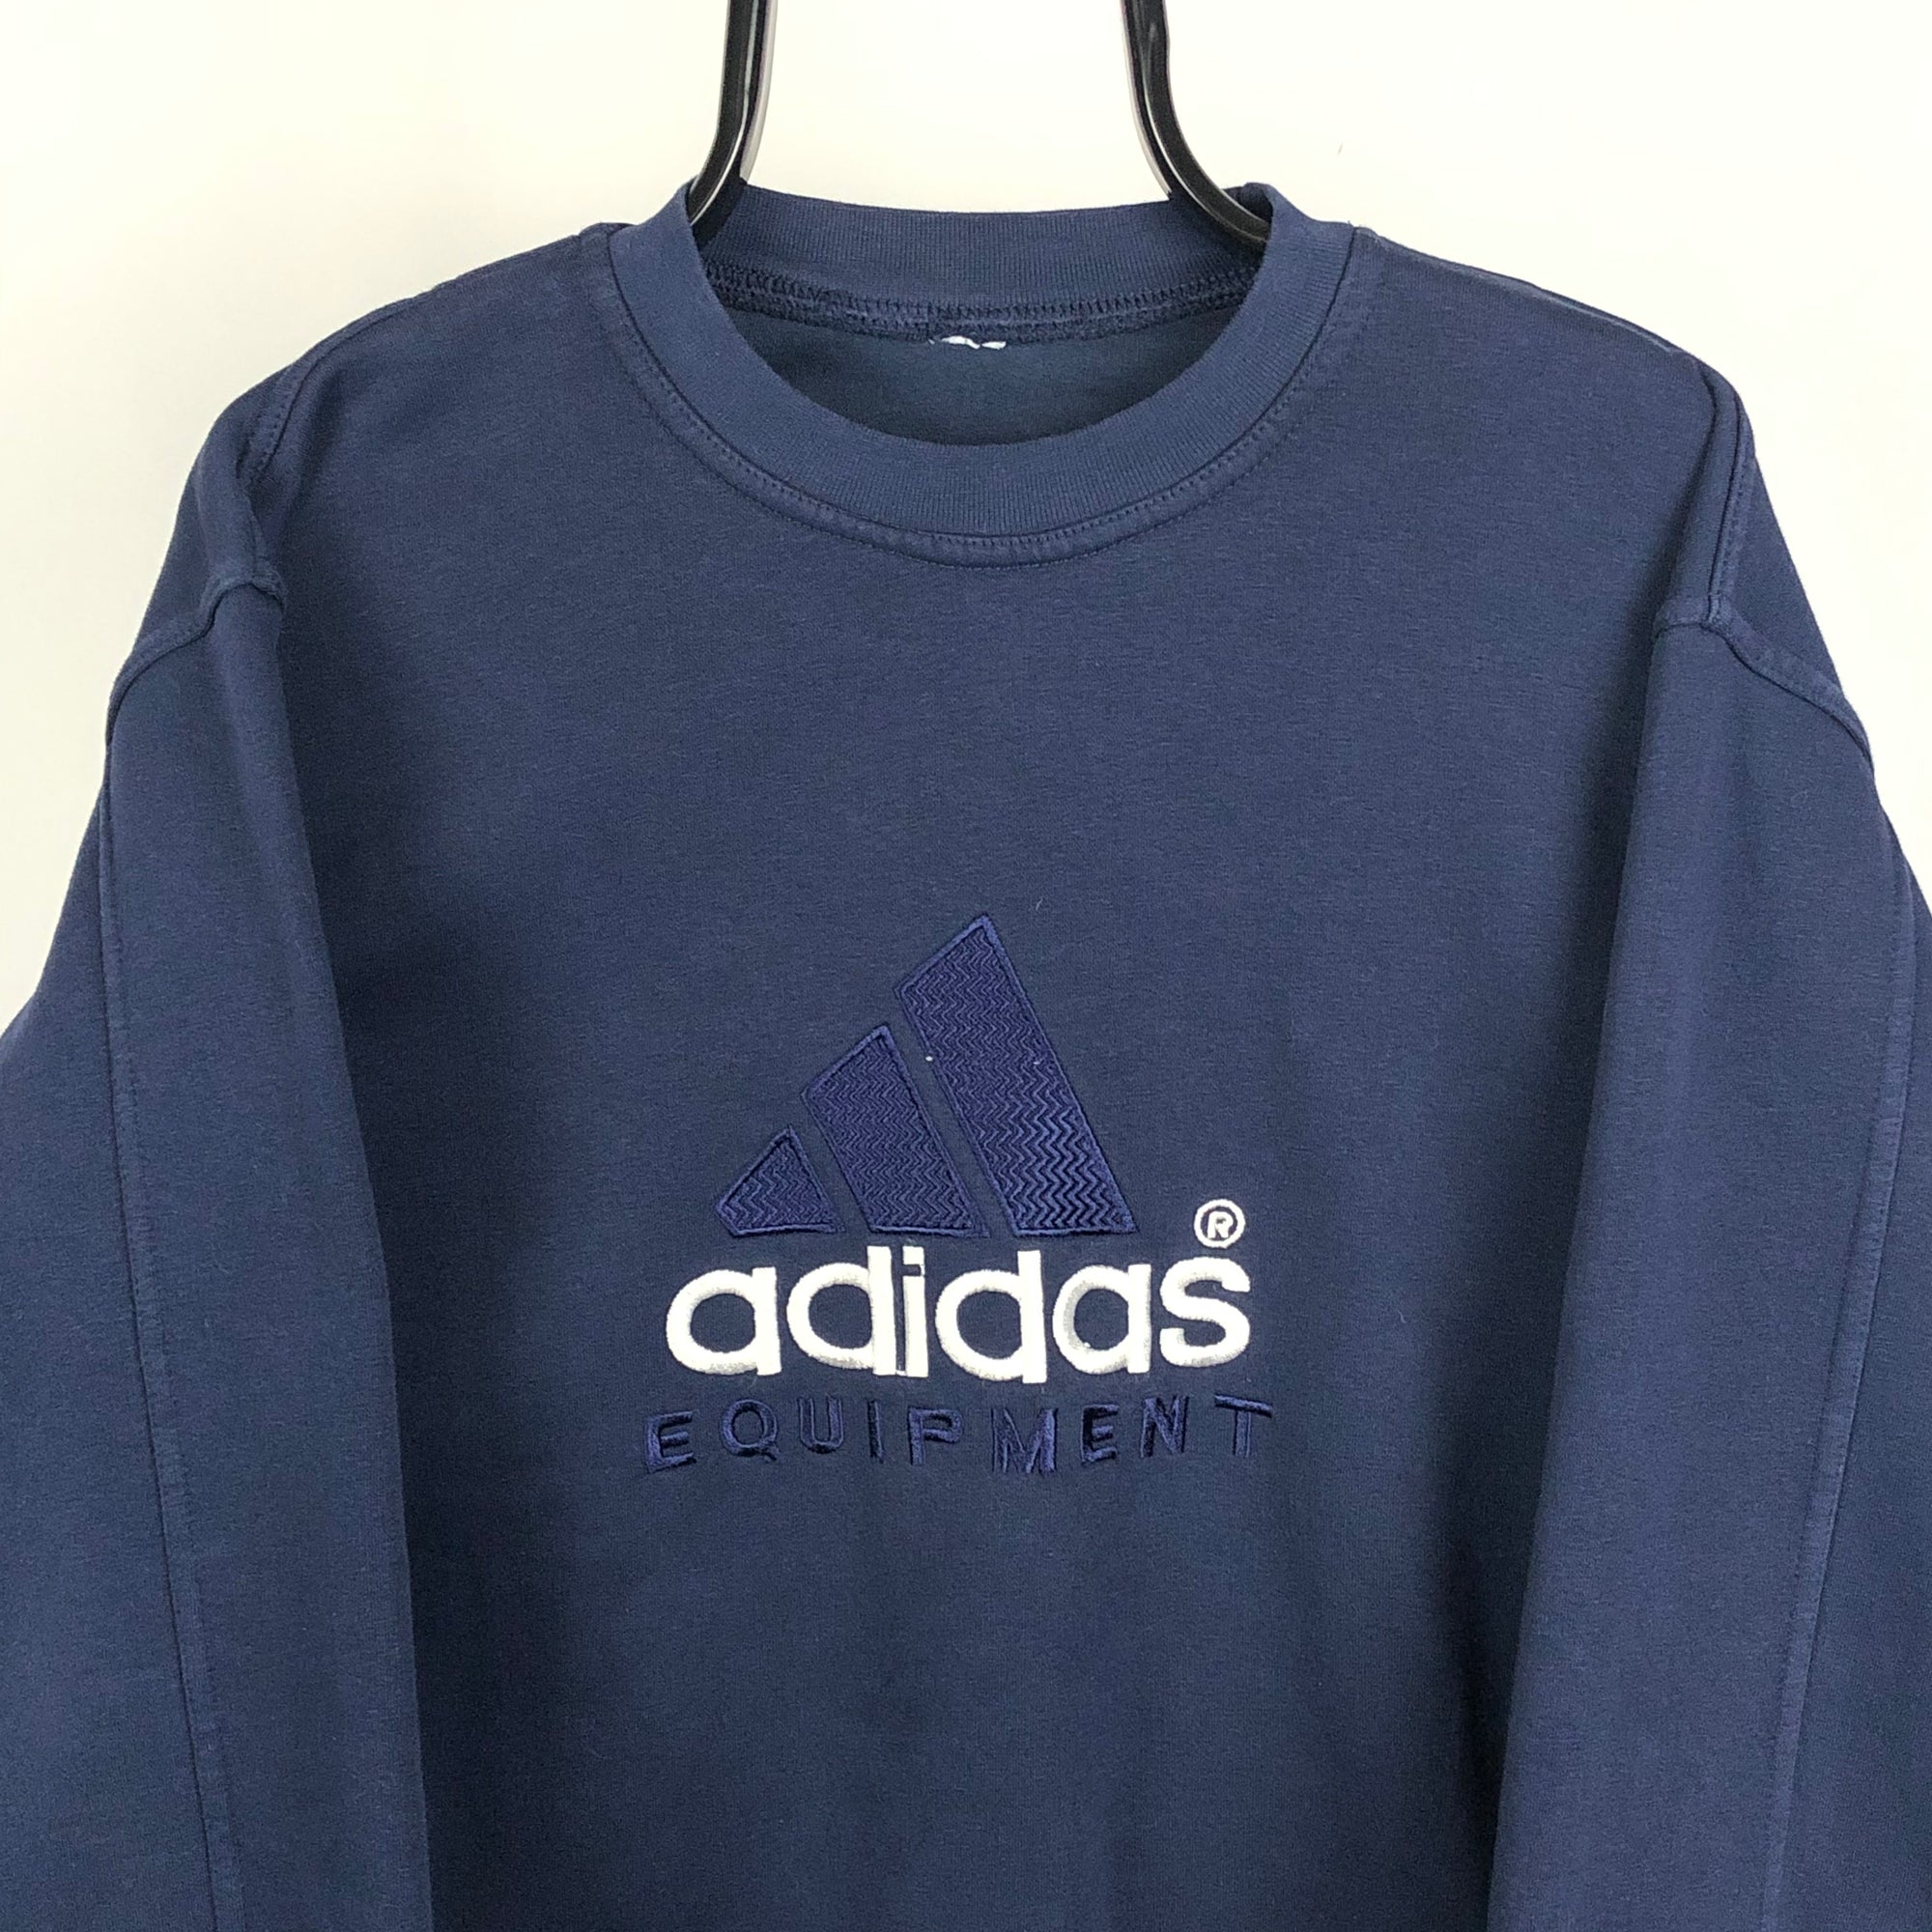 Vintage Adidas Equipment Sweatshirt in Navy - Men's Medium/Women's Large